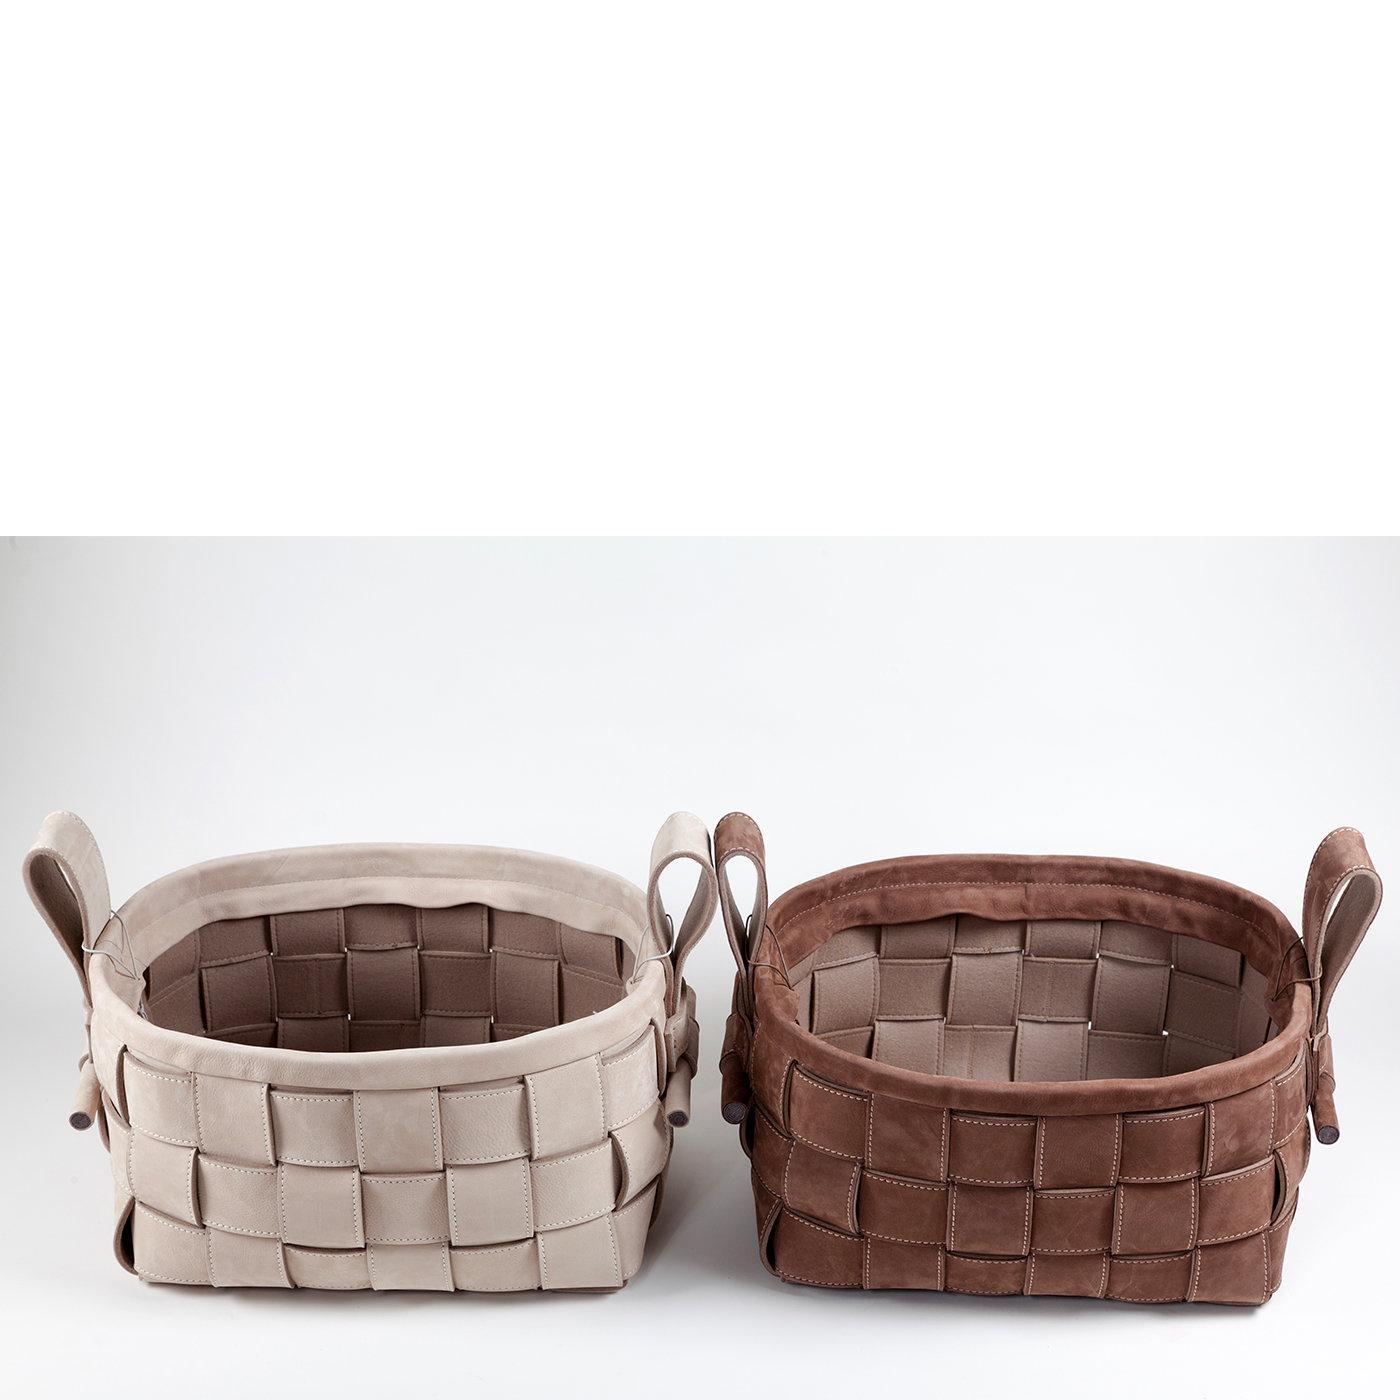 Modern Woven Leather Basket Gray